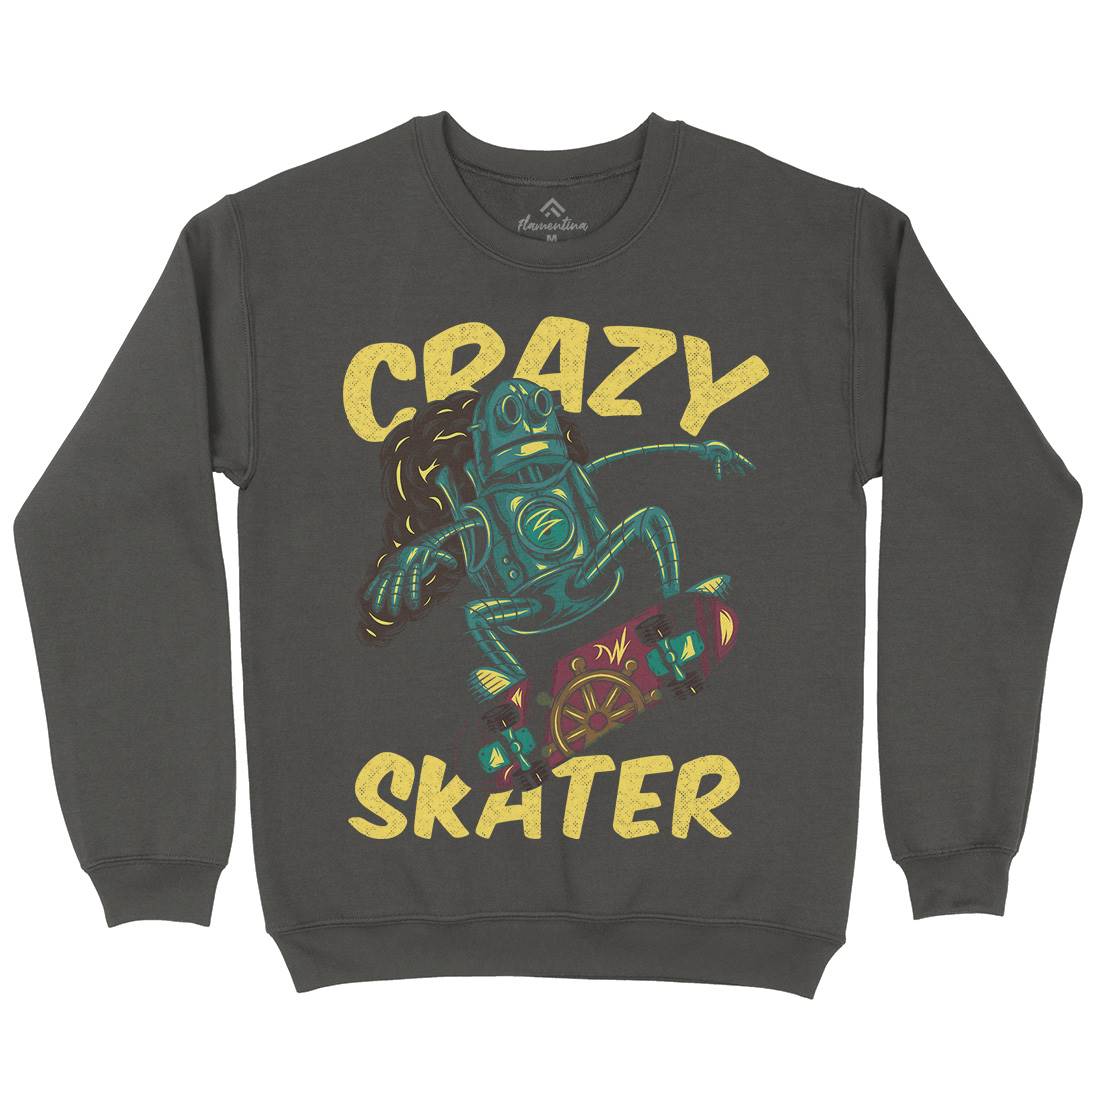 Robot Skater Kids Crew Neck Sweatshirt Skate C882